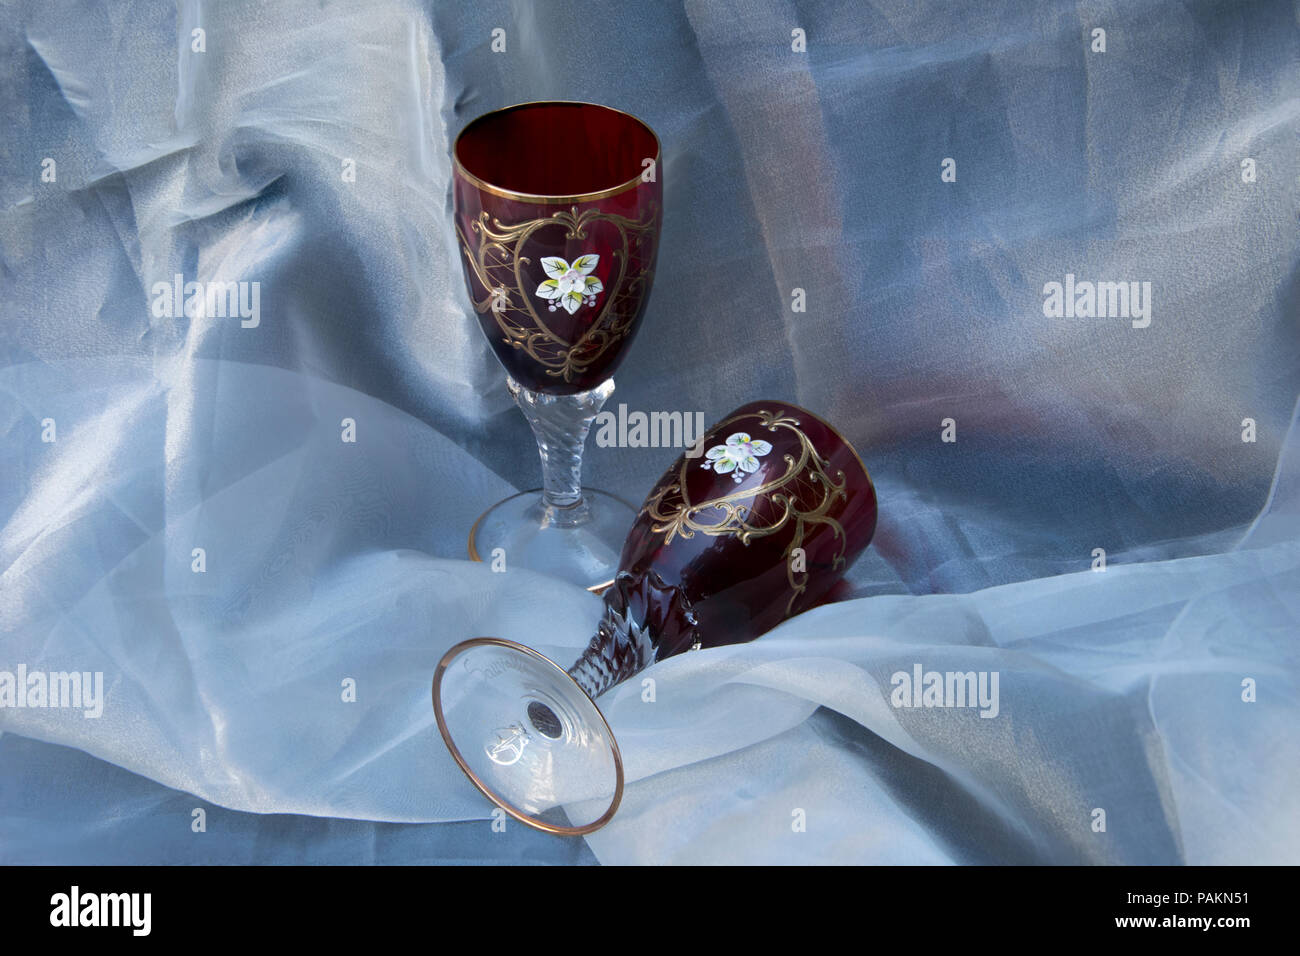 https://c8.alamy.com/comp/PAKN51/two-glasses-of-murano-glass-wine-PAKN51.jpg